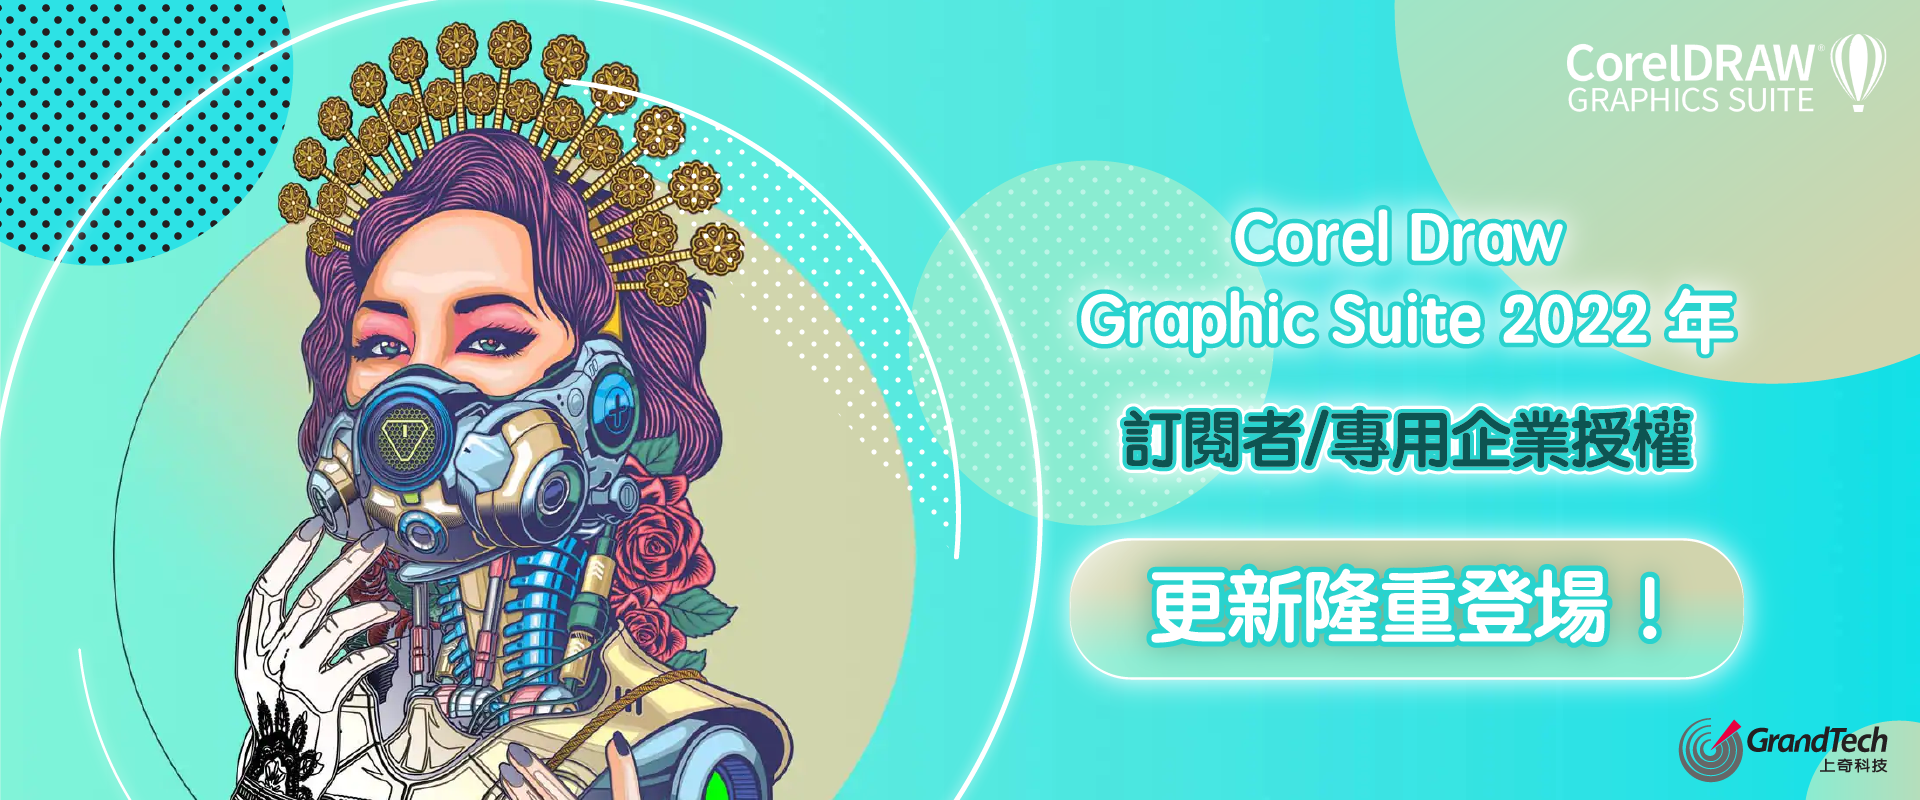 CorelDRAW Graphics Suite 2022 全新功能上線！